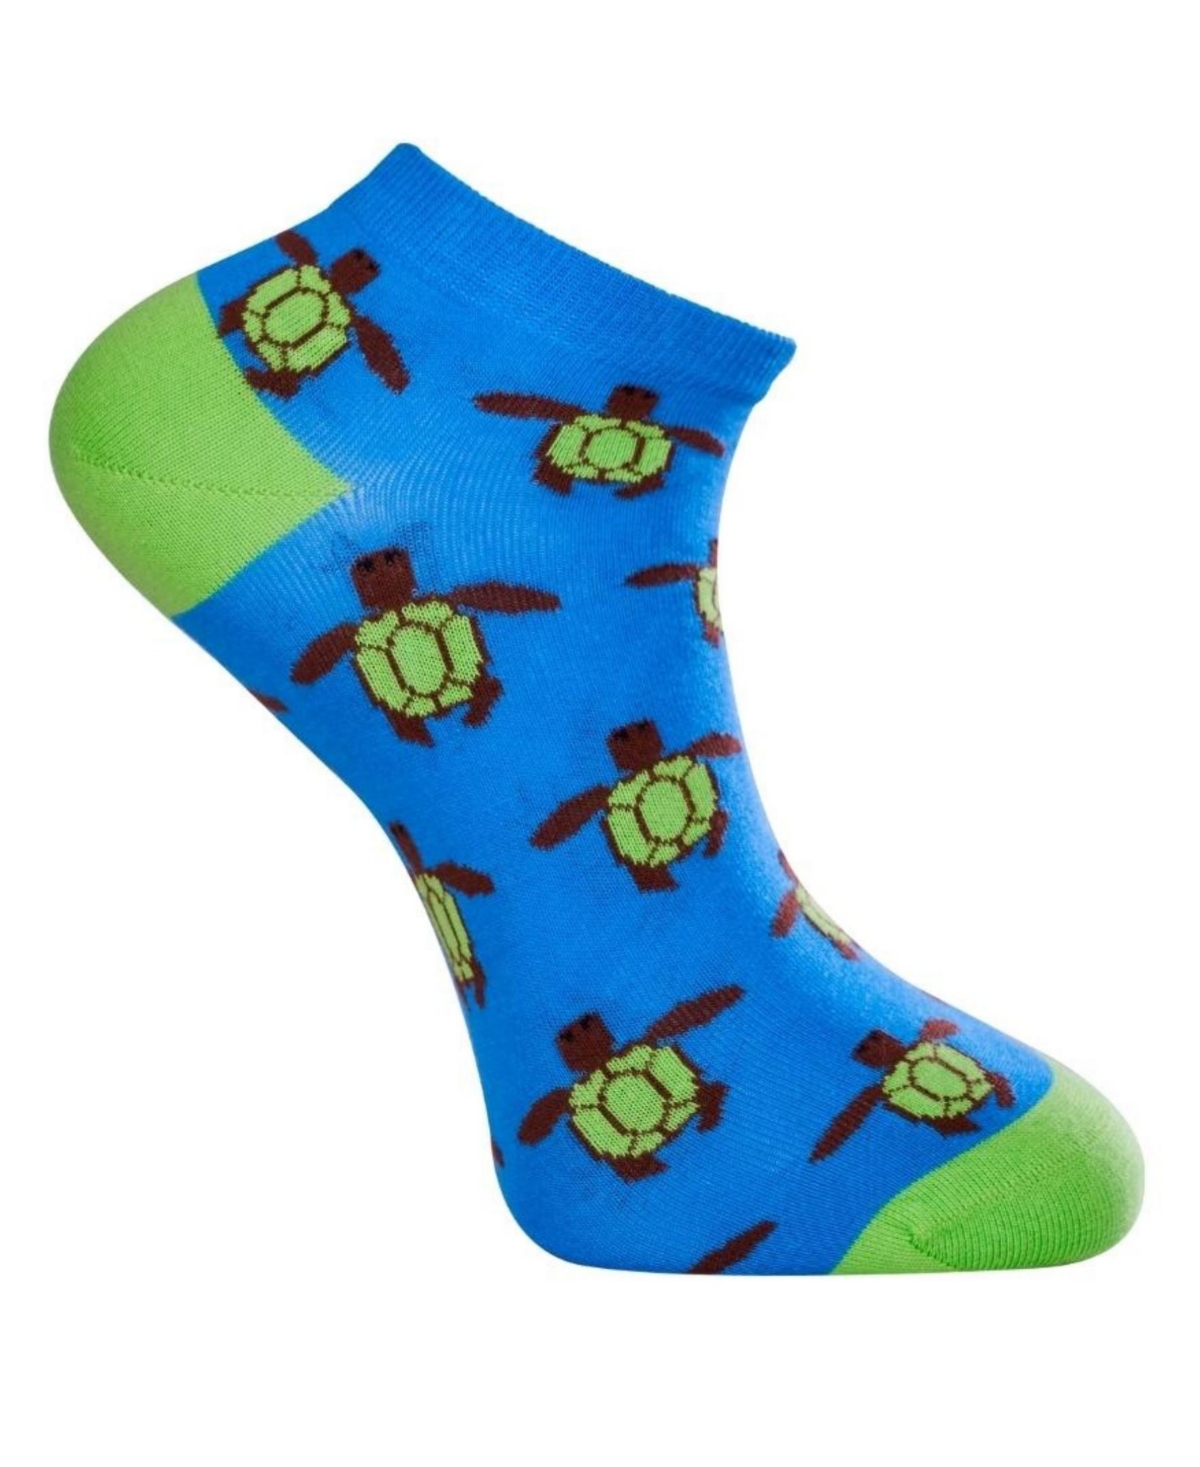 Men's Turtle Novelty Ankle Socks - Turquoise